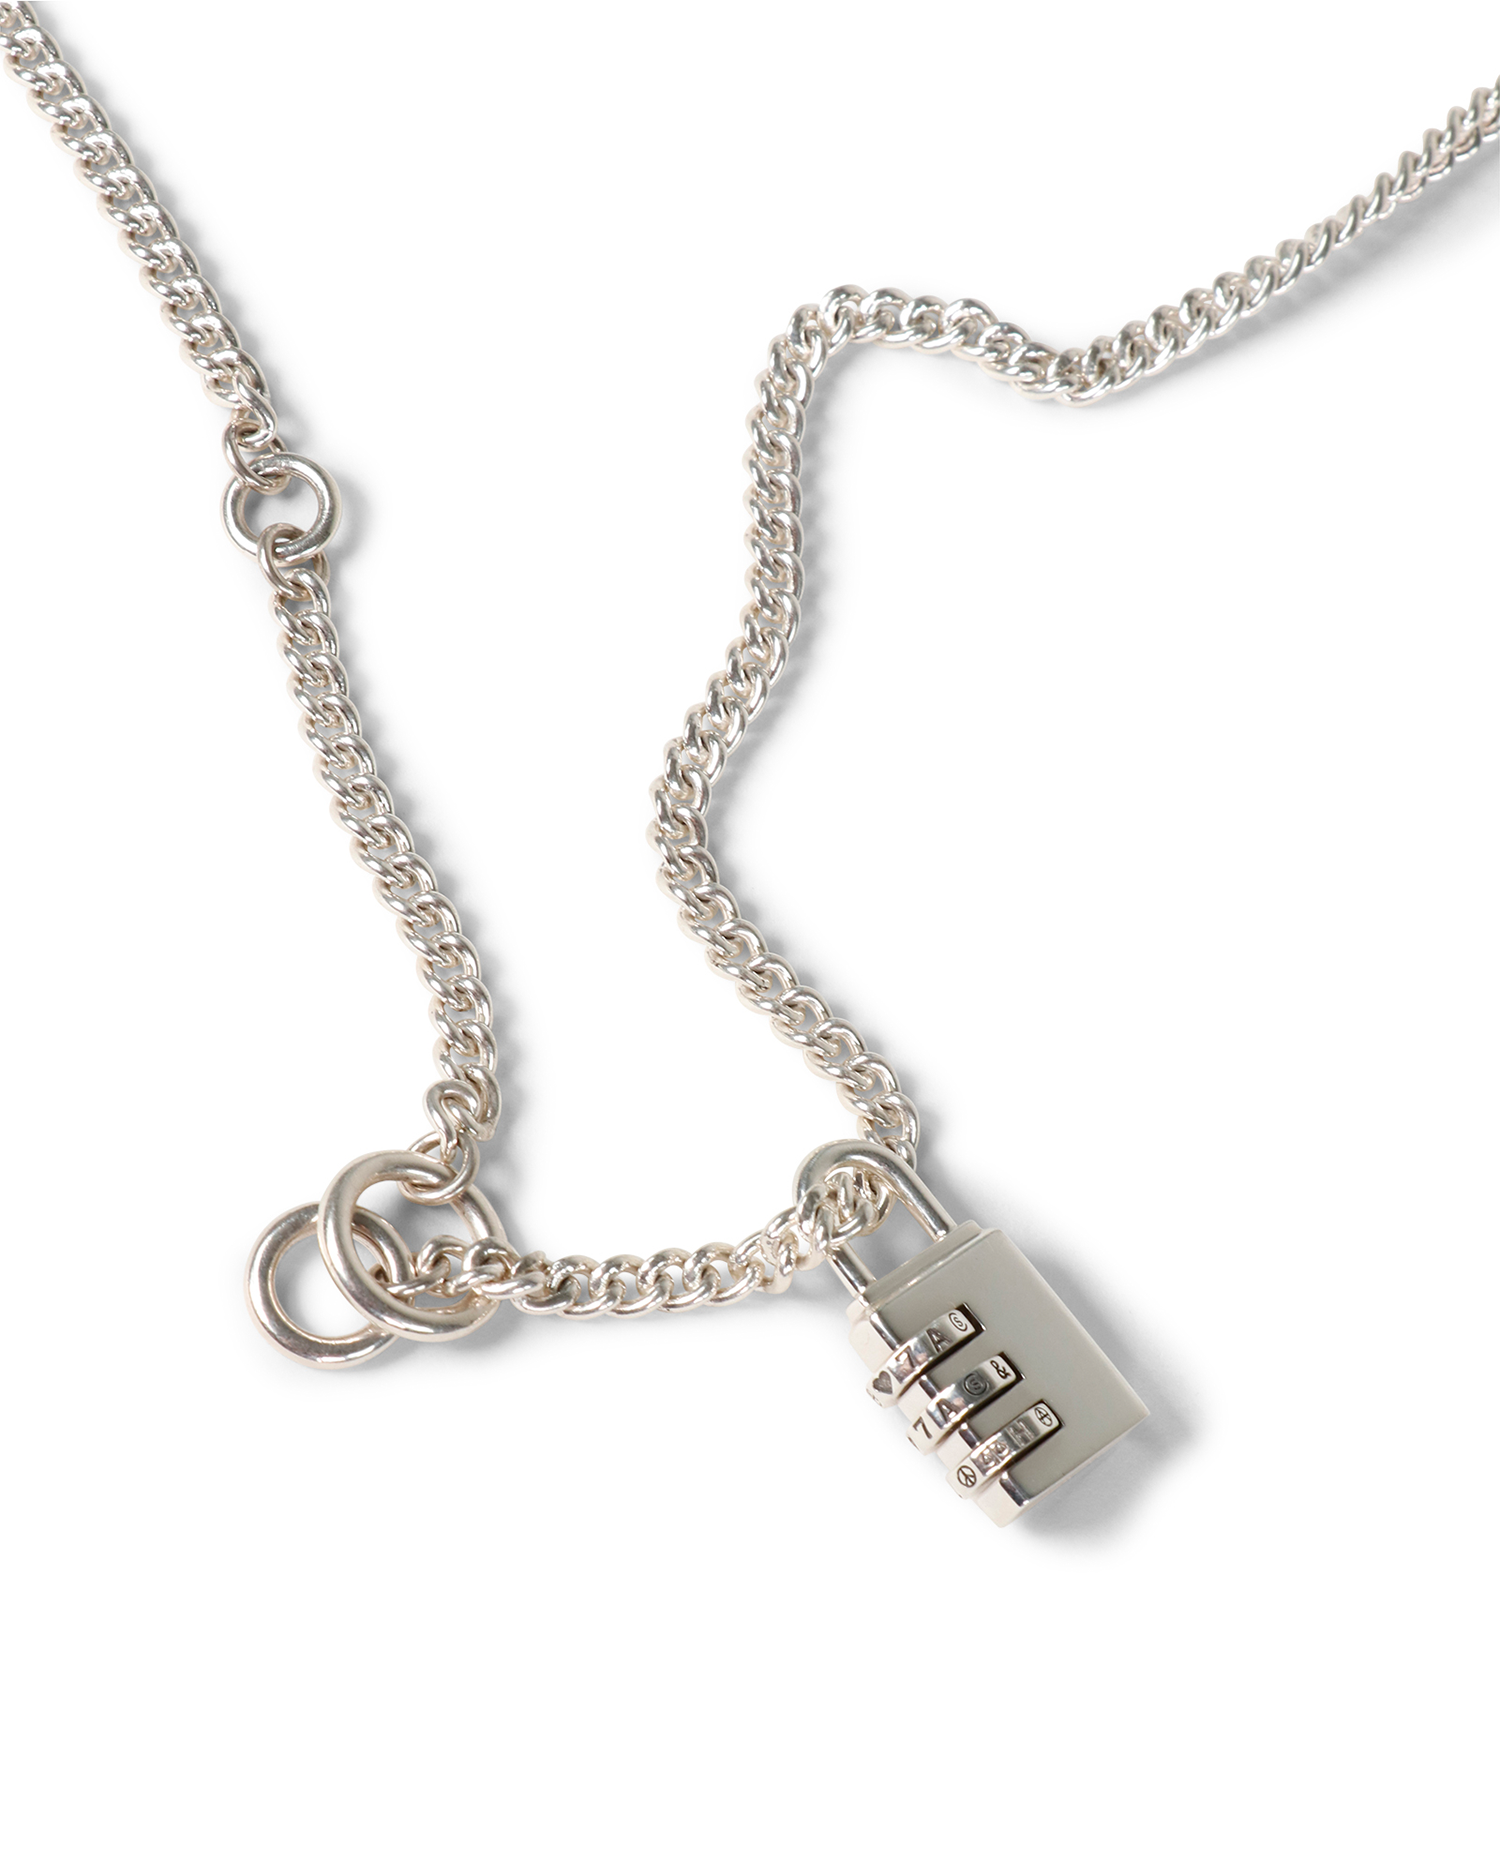 Cameron Studio Choker Chain & Bracelet - 925 Sterling Silver